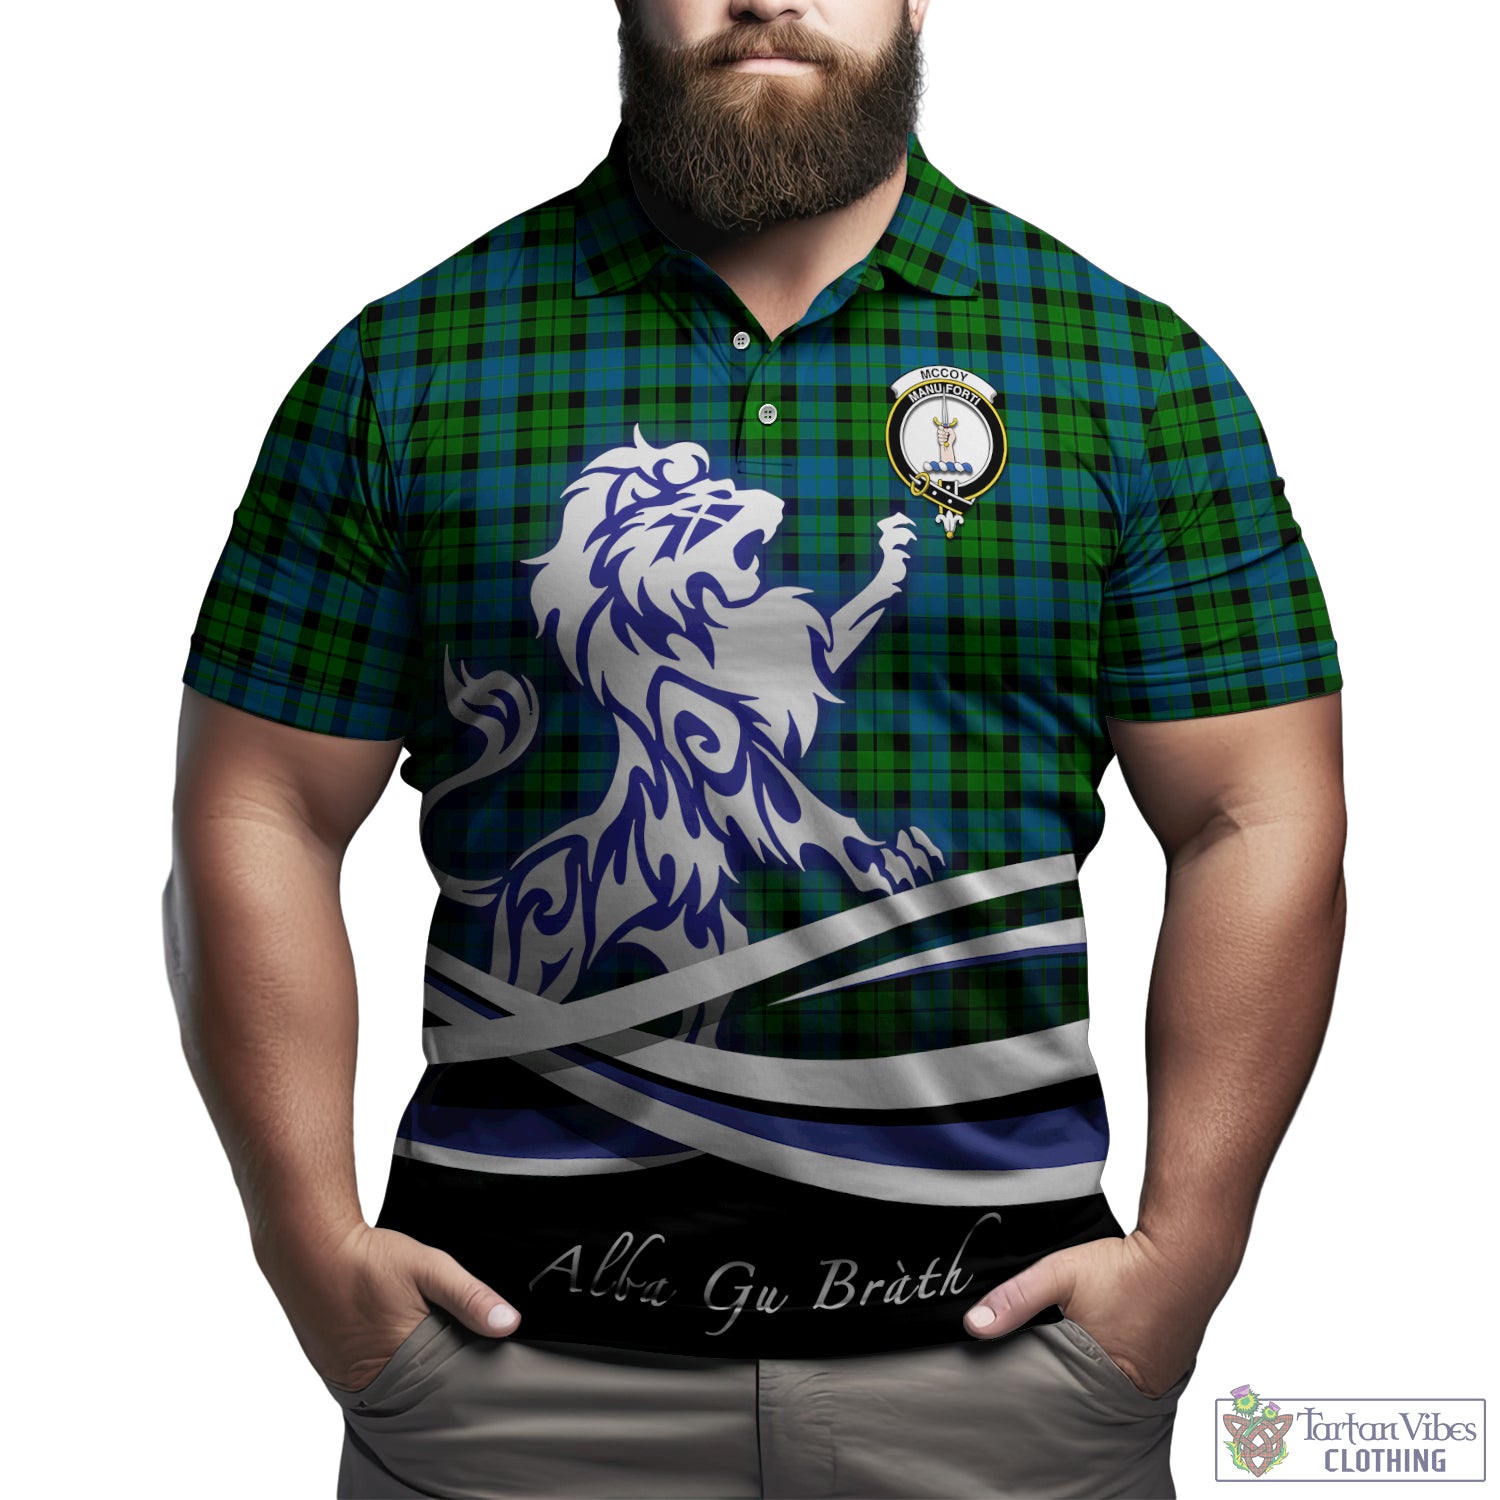 mccoy-tartan-polo-shirt-with-alba-gu-brath-regal-lion-emblem